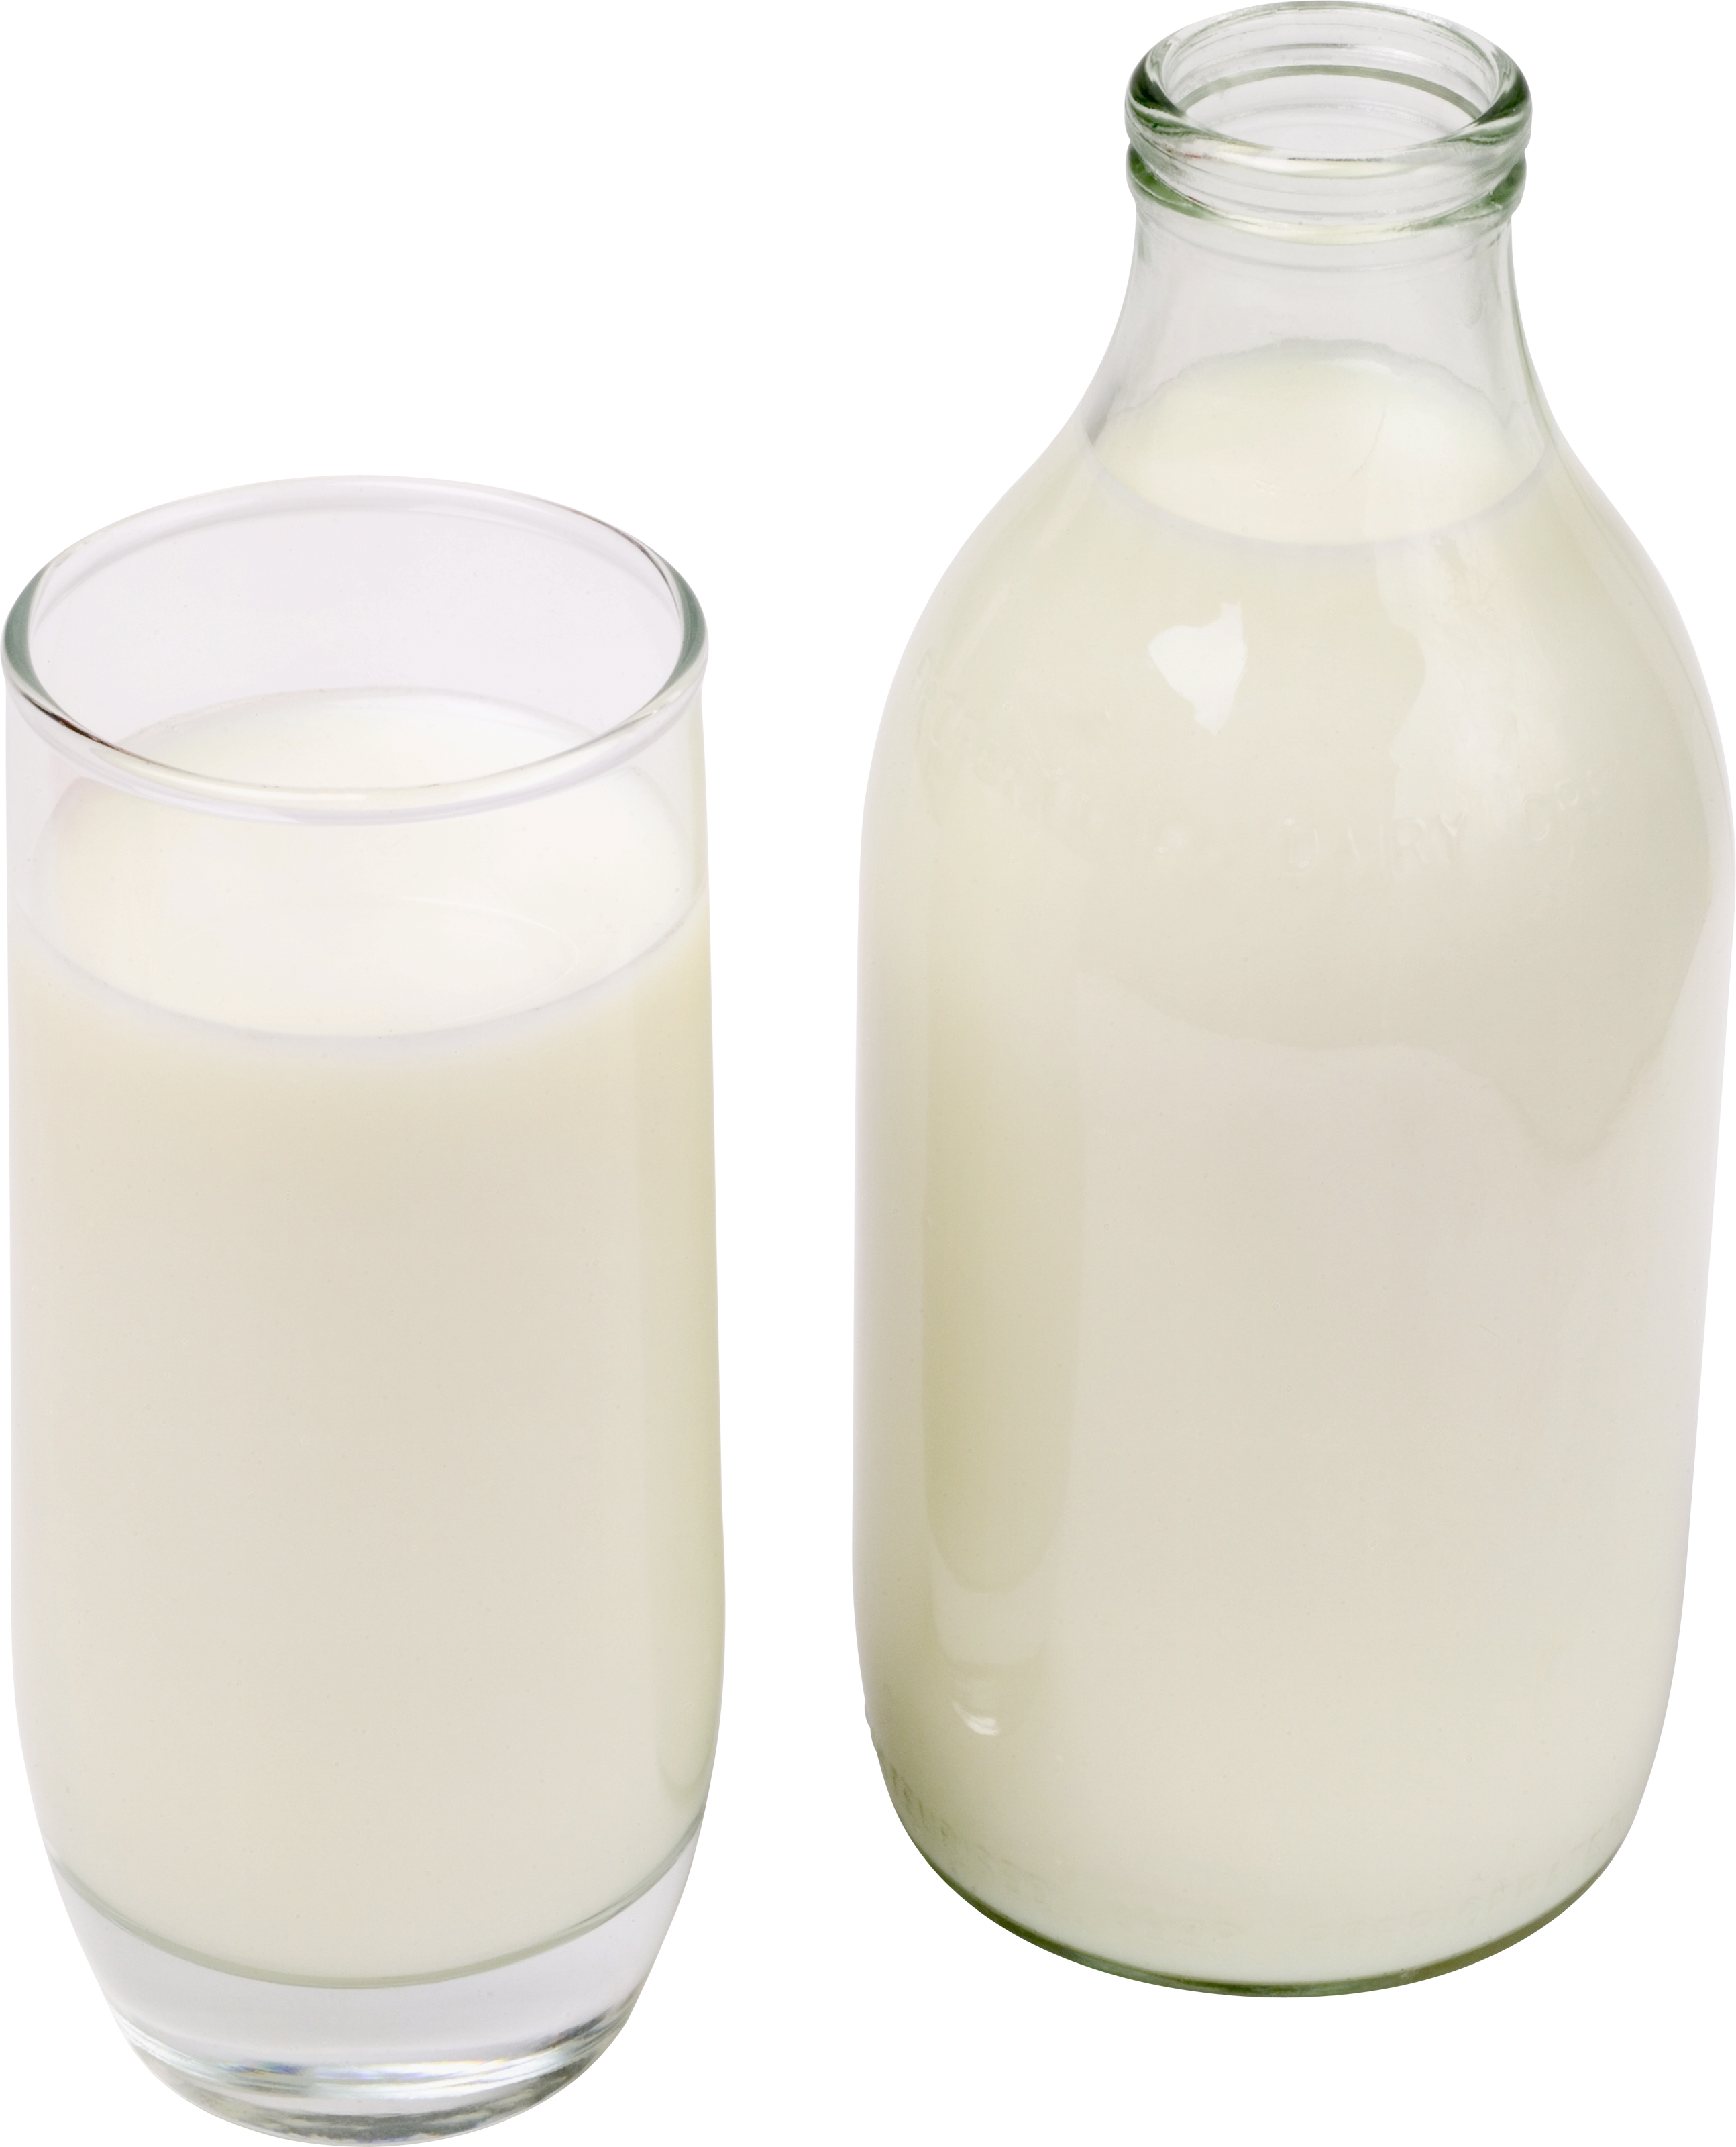 Milk PNG images Download